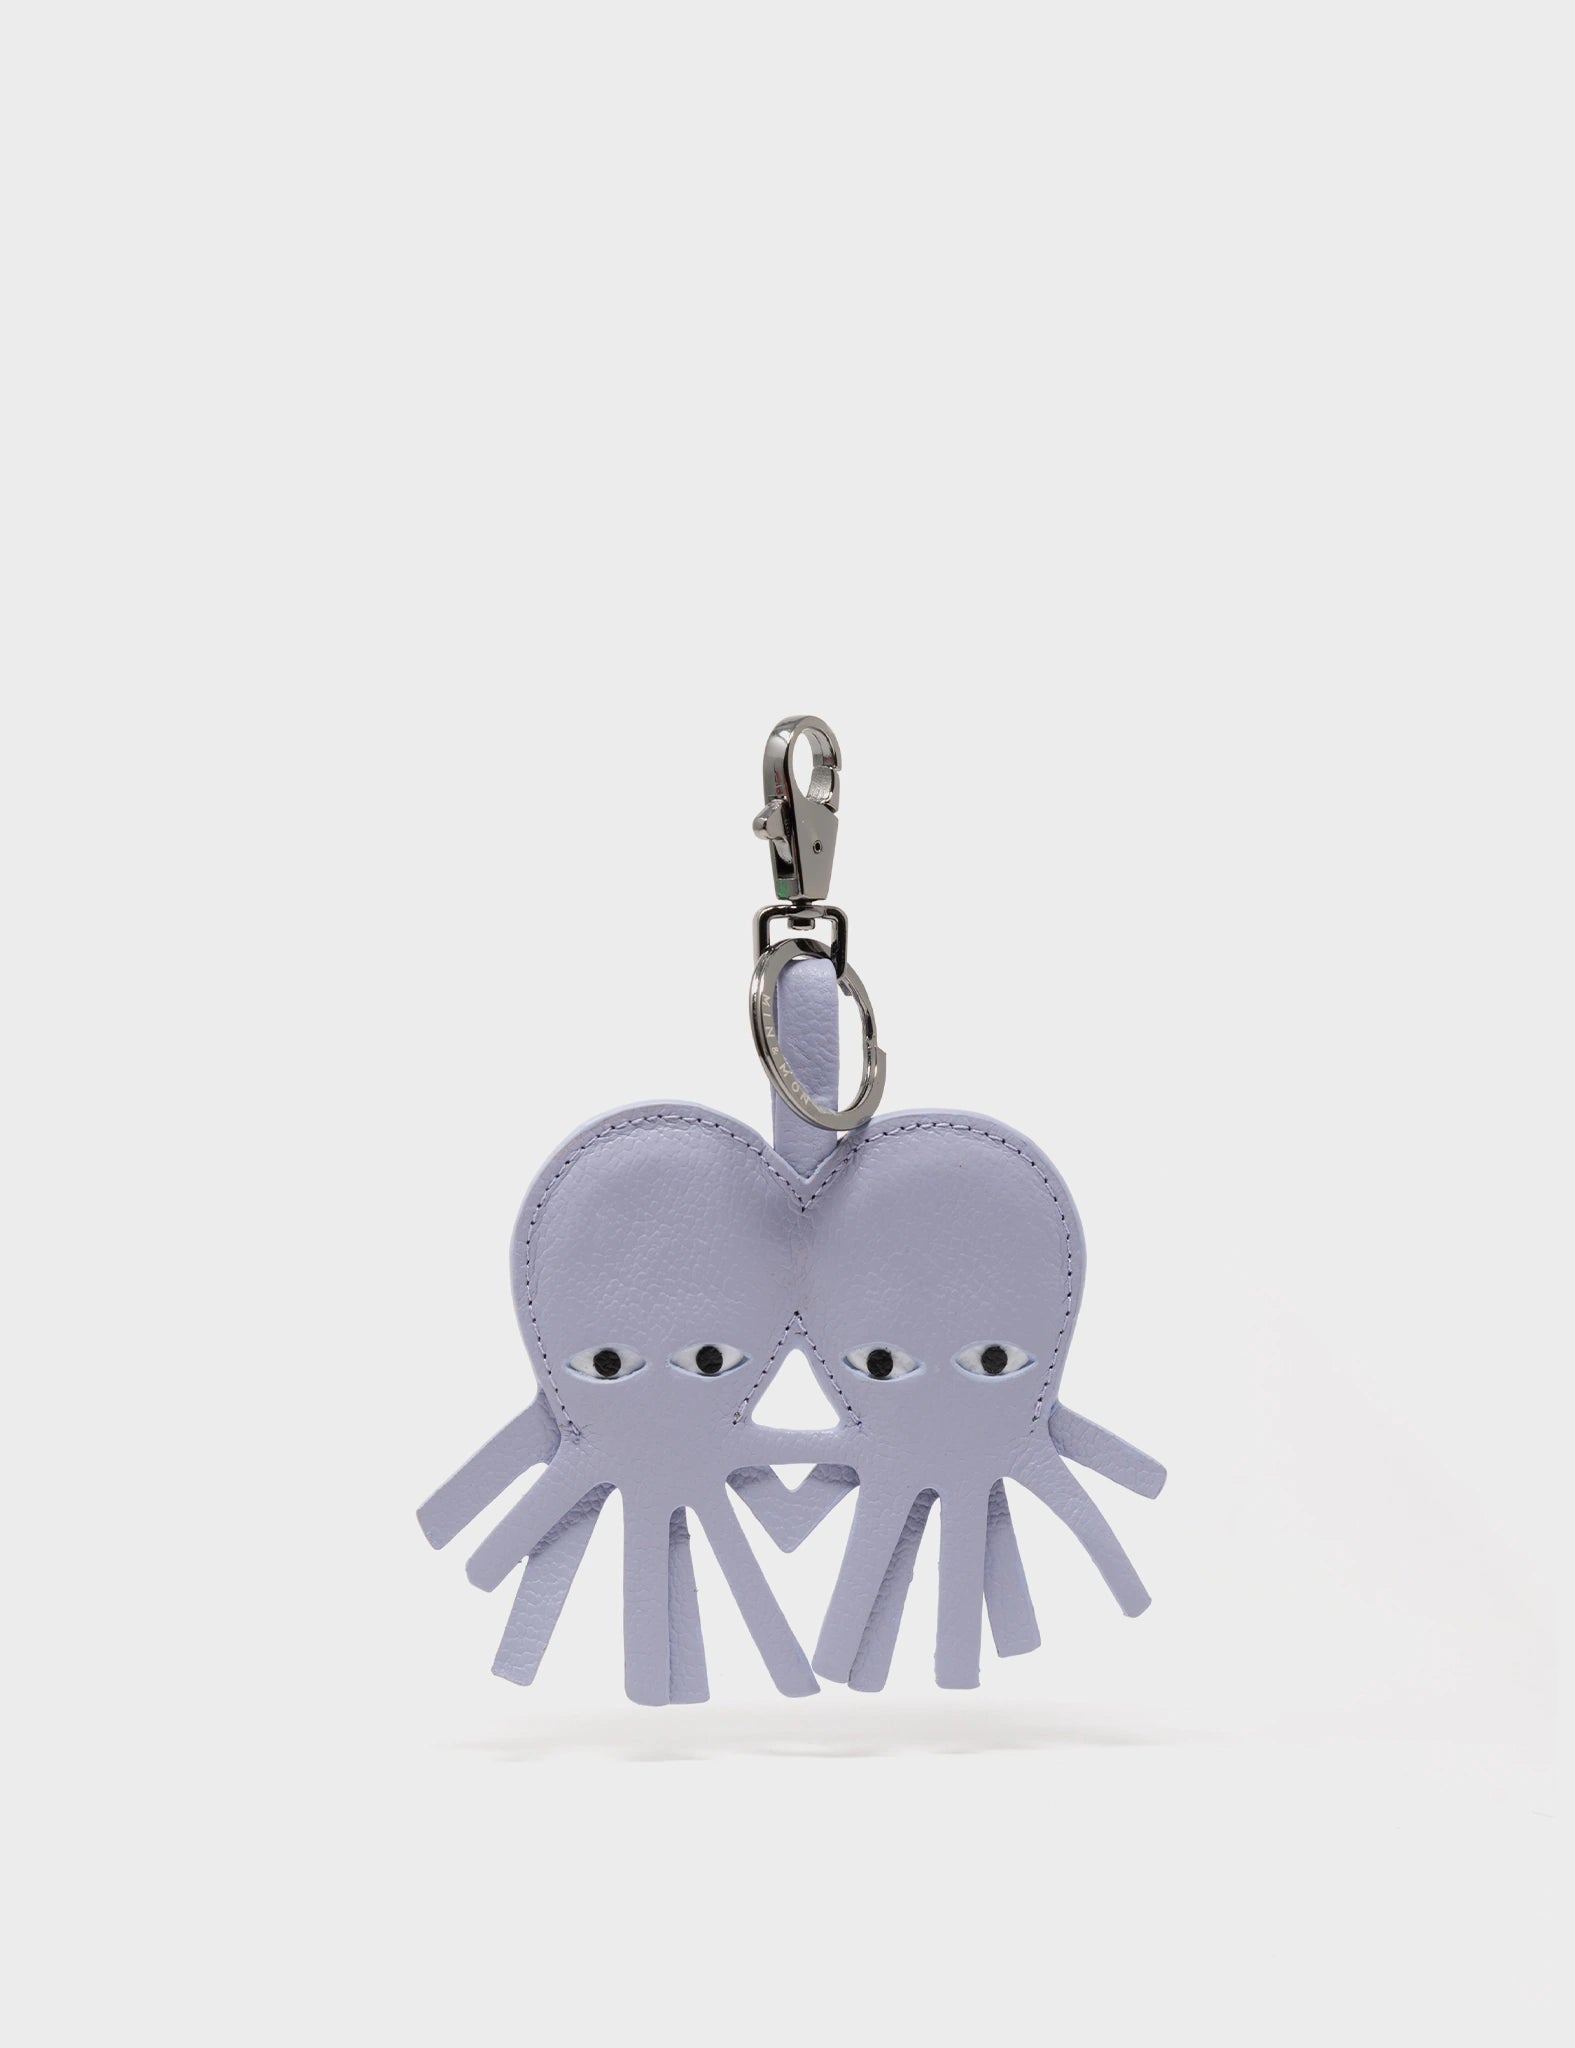 Octopus Charm - Icelandic Blue Leather Keychain